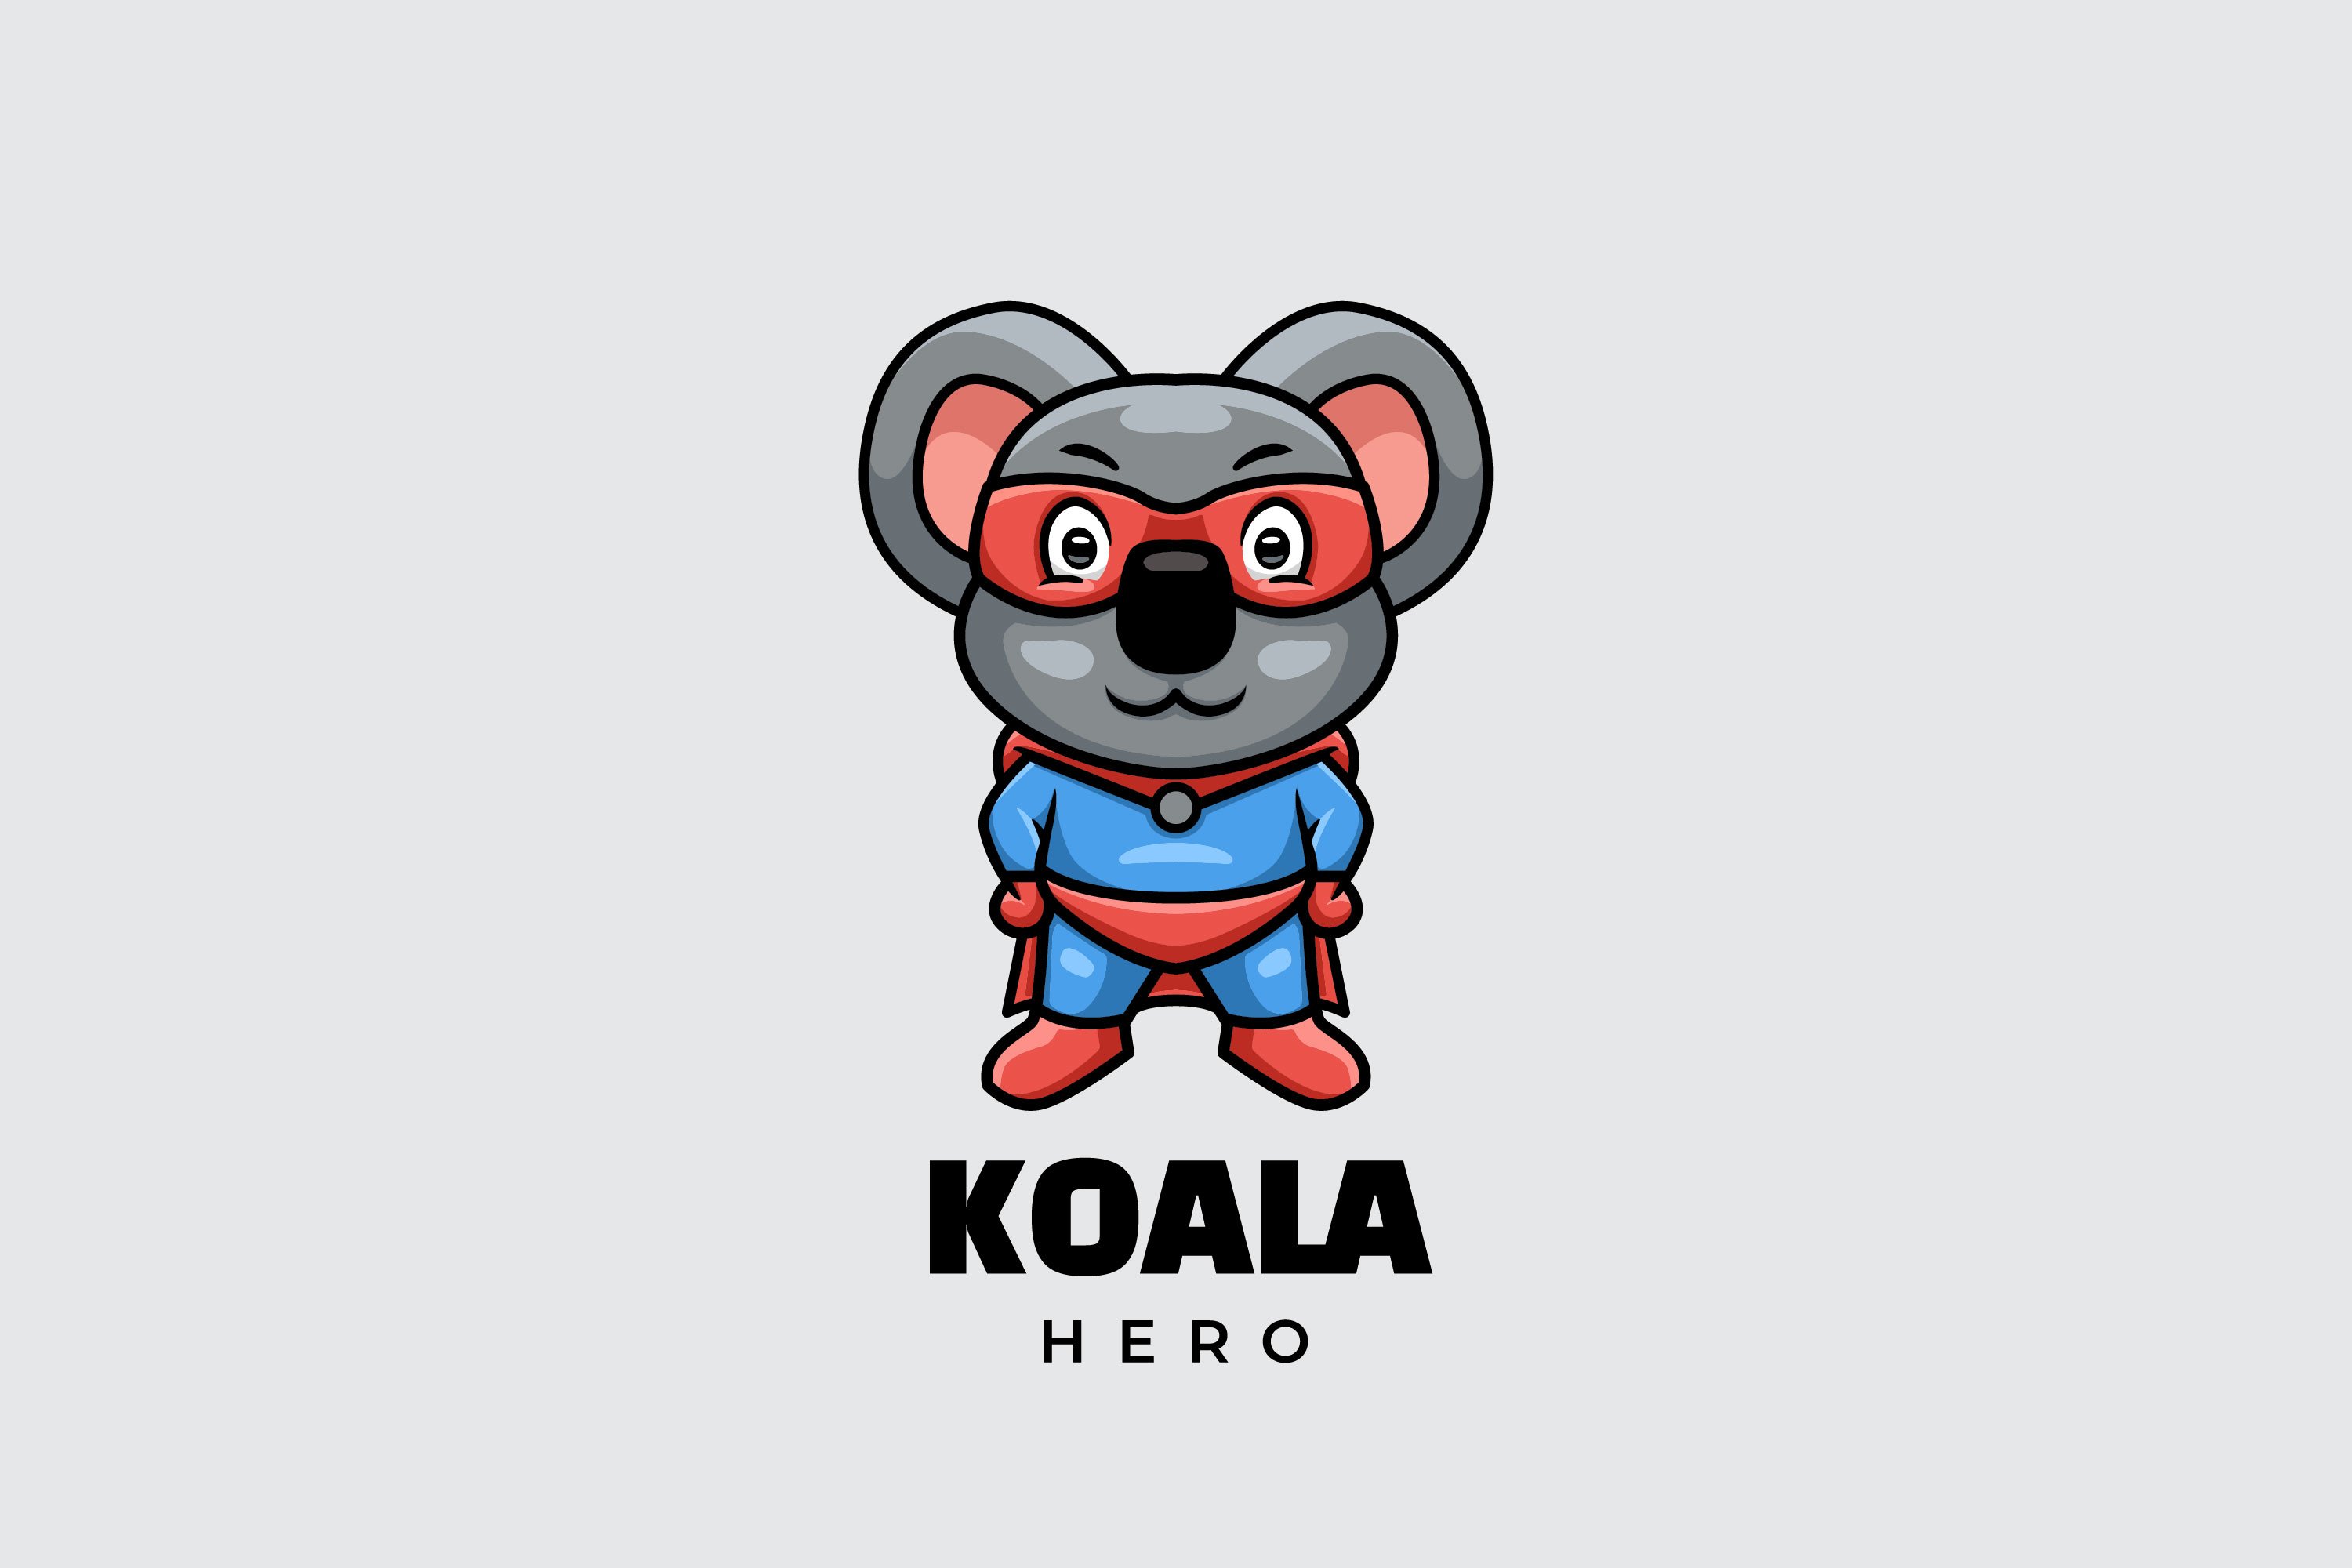 Koala Hero Cartoon Logo cover image.